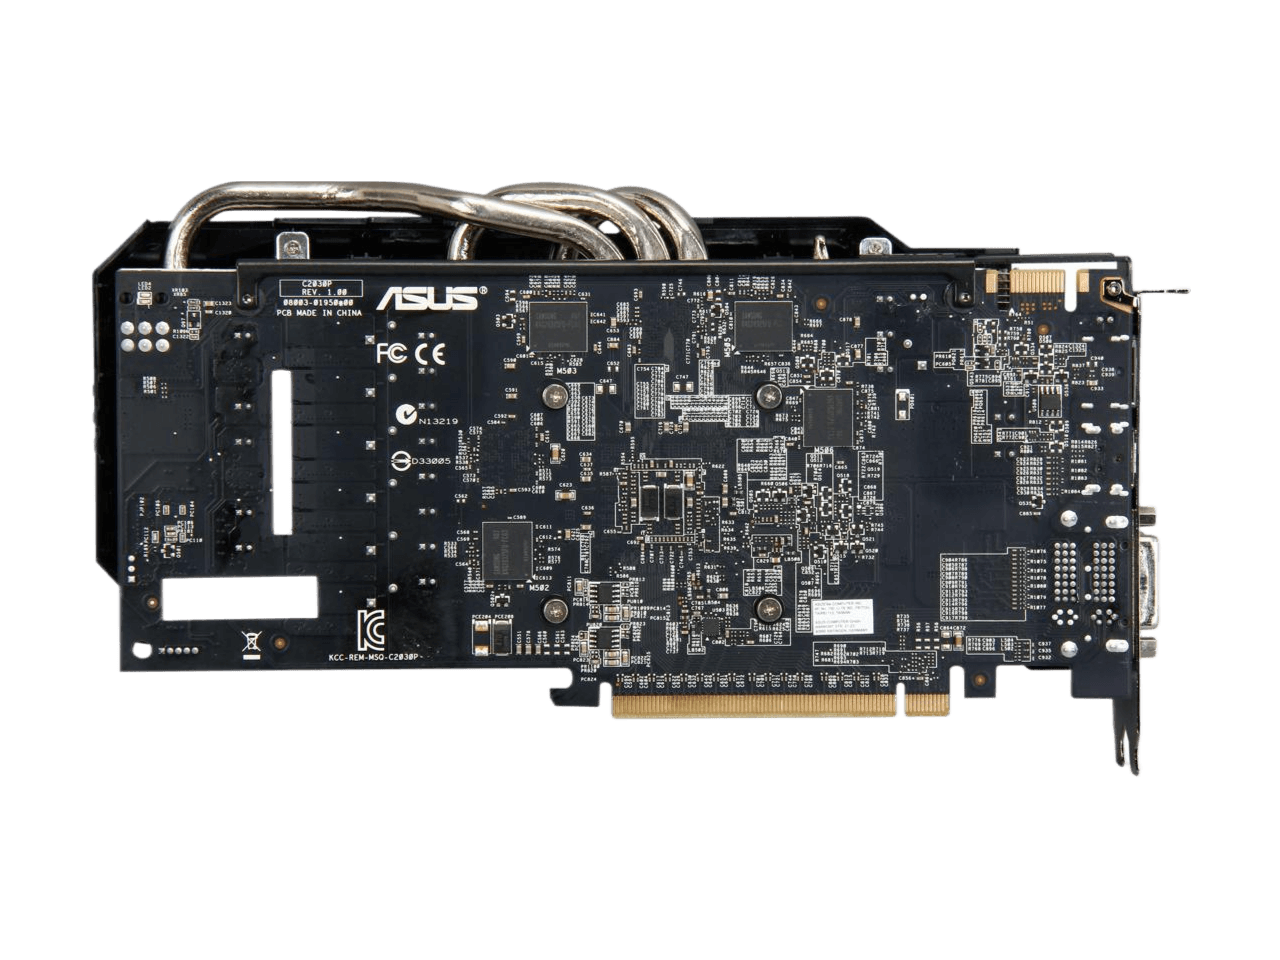 ASUS GeForce GTX 660 2GB 192-Bit GDDR5 G-SYNC Support PCI Express 3.0 x16 HDCP Ready SLI Support Video Card GTX660-DC2O-2GD5